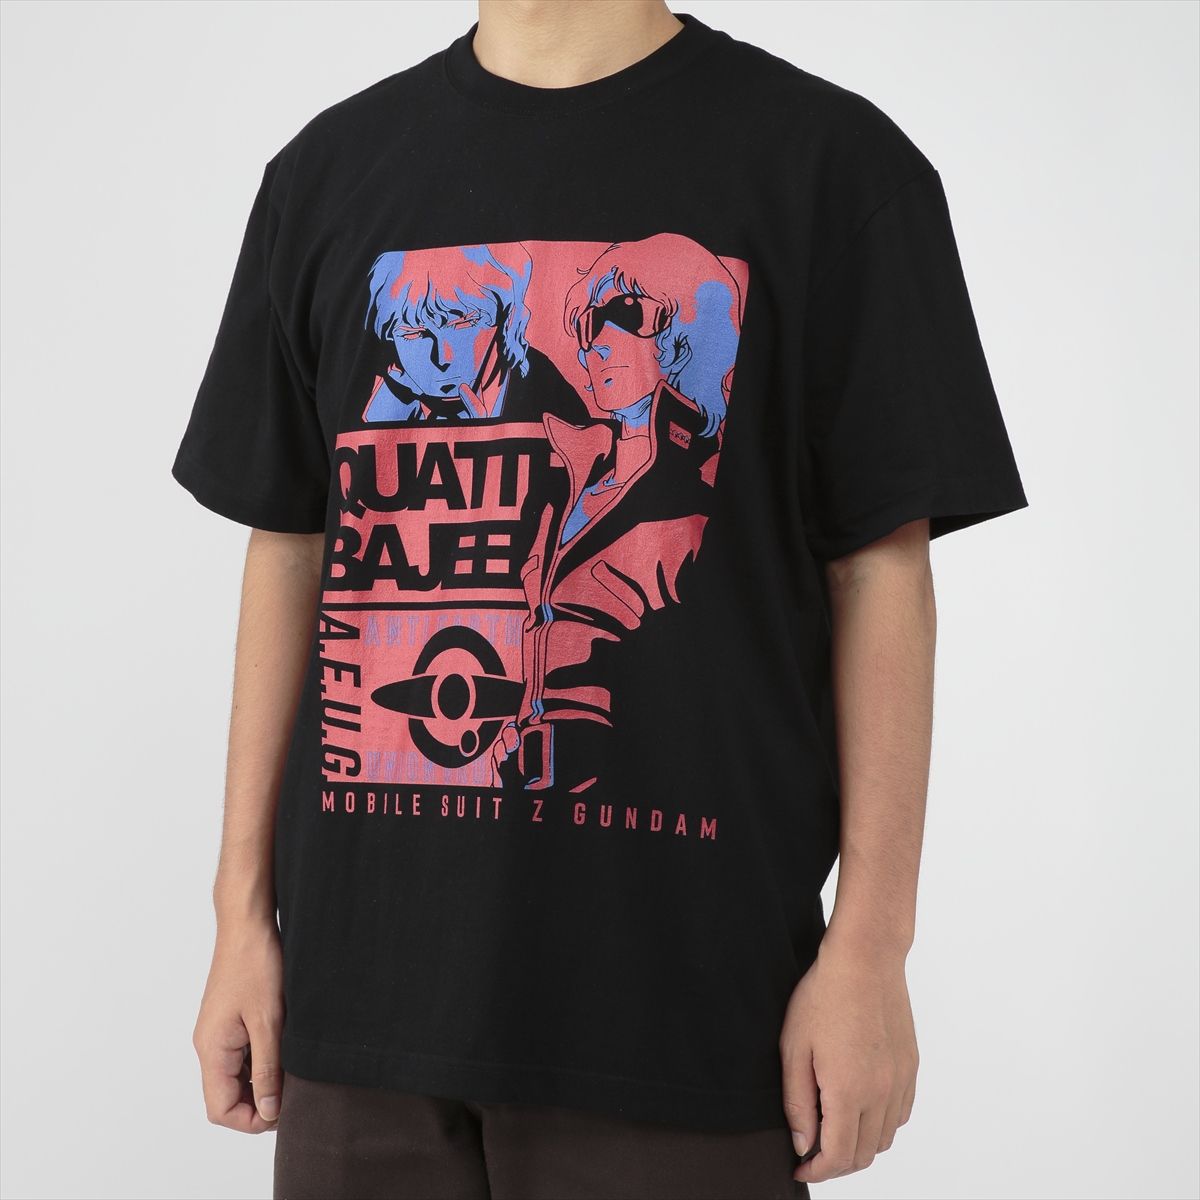 Mobile Suit Zeta Gundam Quattro Bajeena Tricolor-themed T-shirt